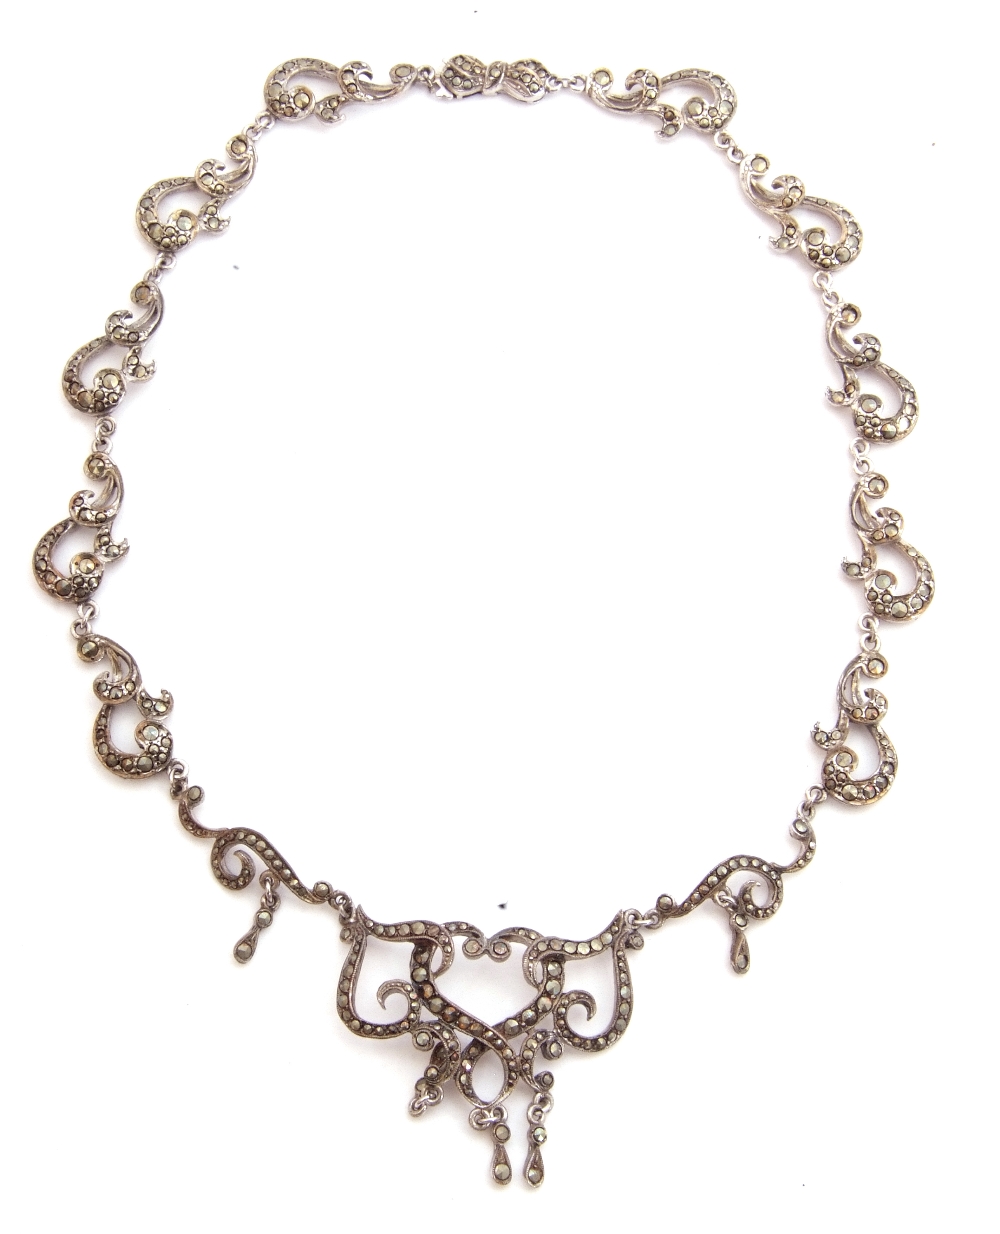 Vintage marcasite set necklace of open work scroll design, 37cm long, stamped "silver" - Image 3 of 5